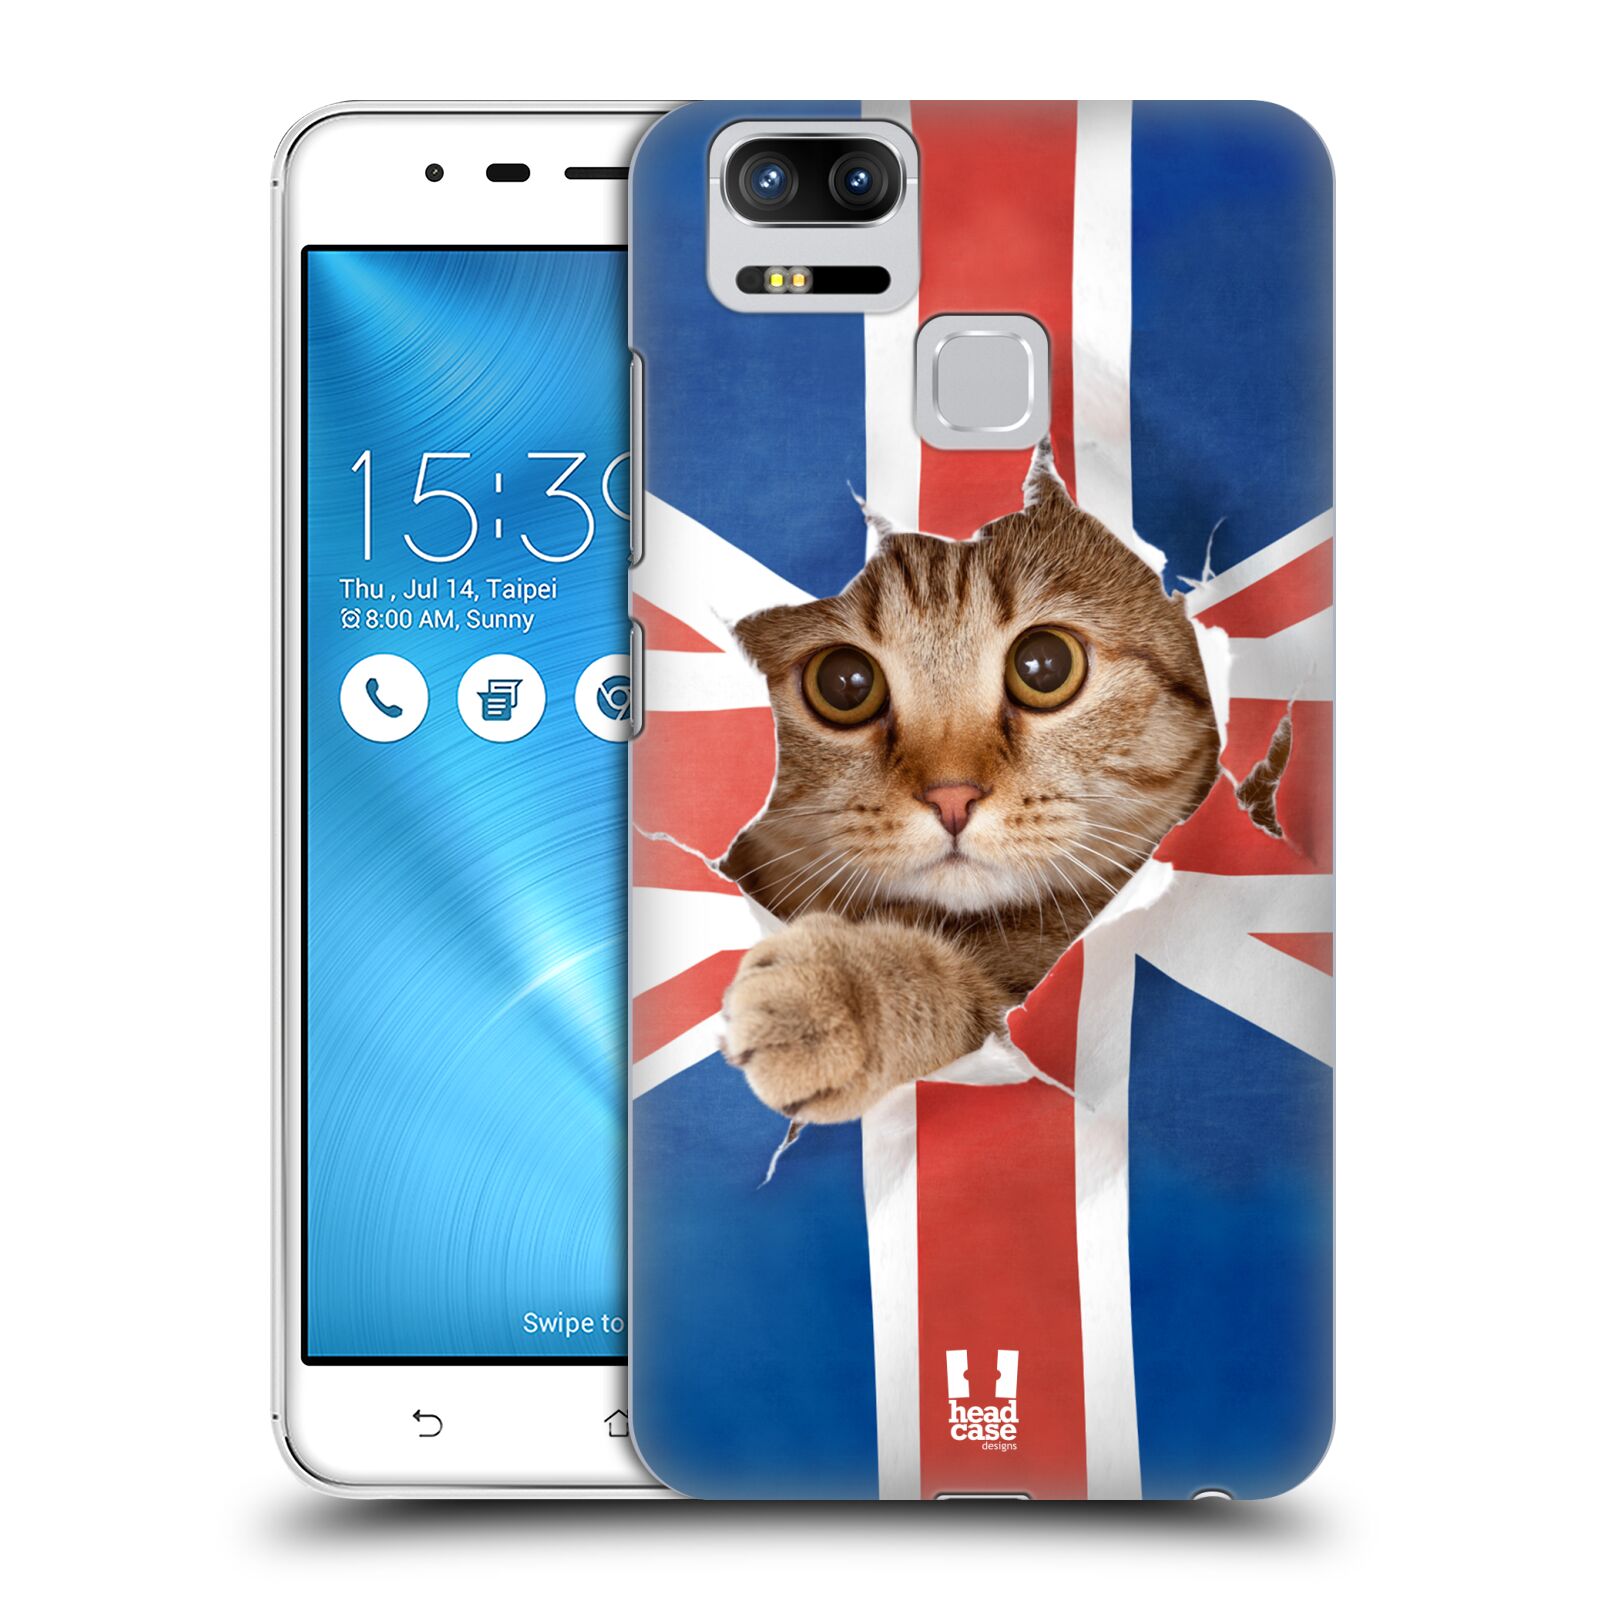 HEAD CASE plastový obal na mobil Asus Zenfone 3 Zoom ZE553KL vzor Legrační zvířátka kočička a Velká Británie vlajka